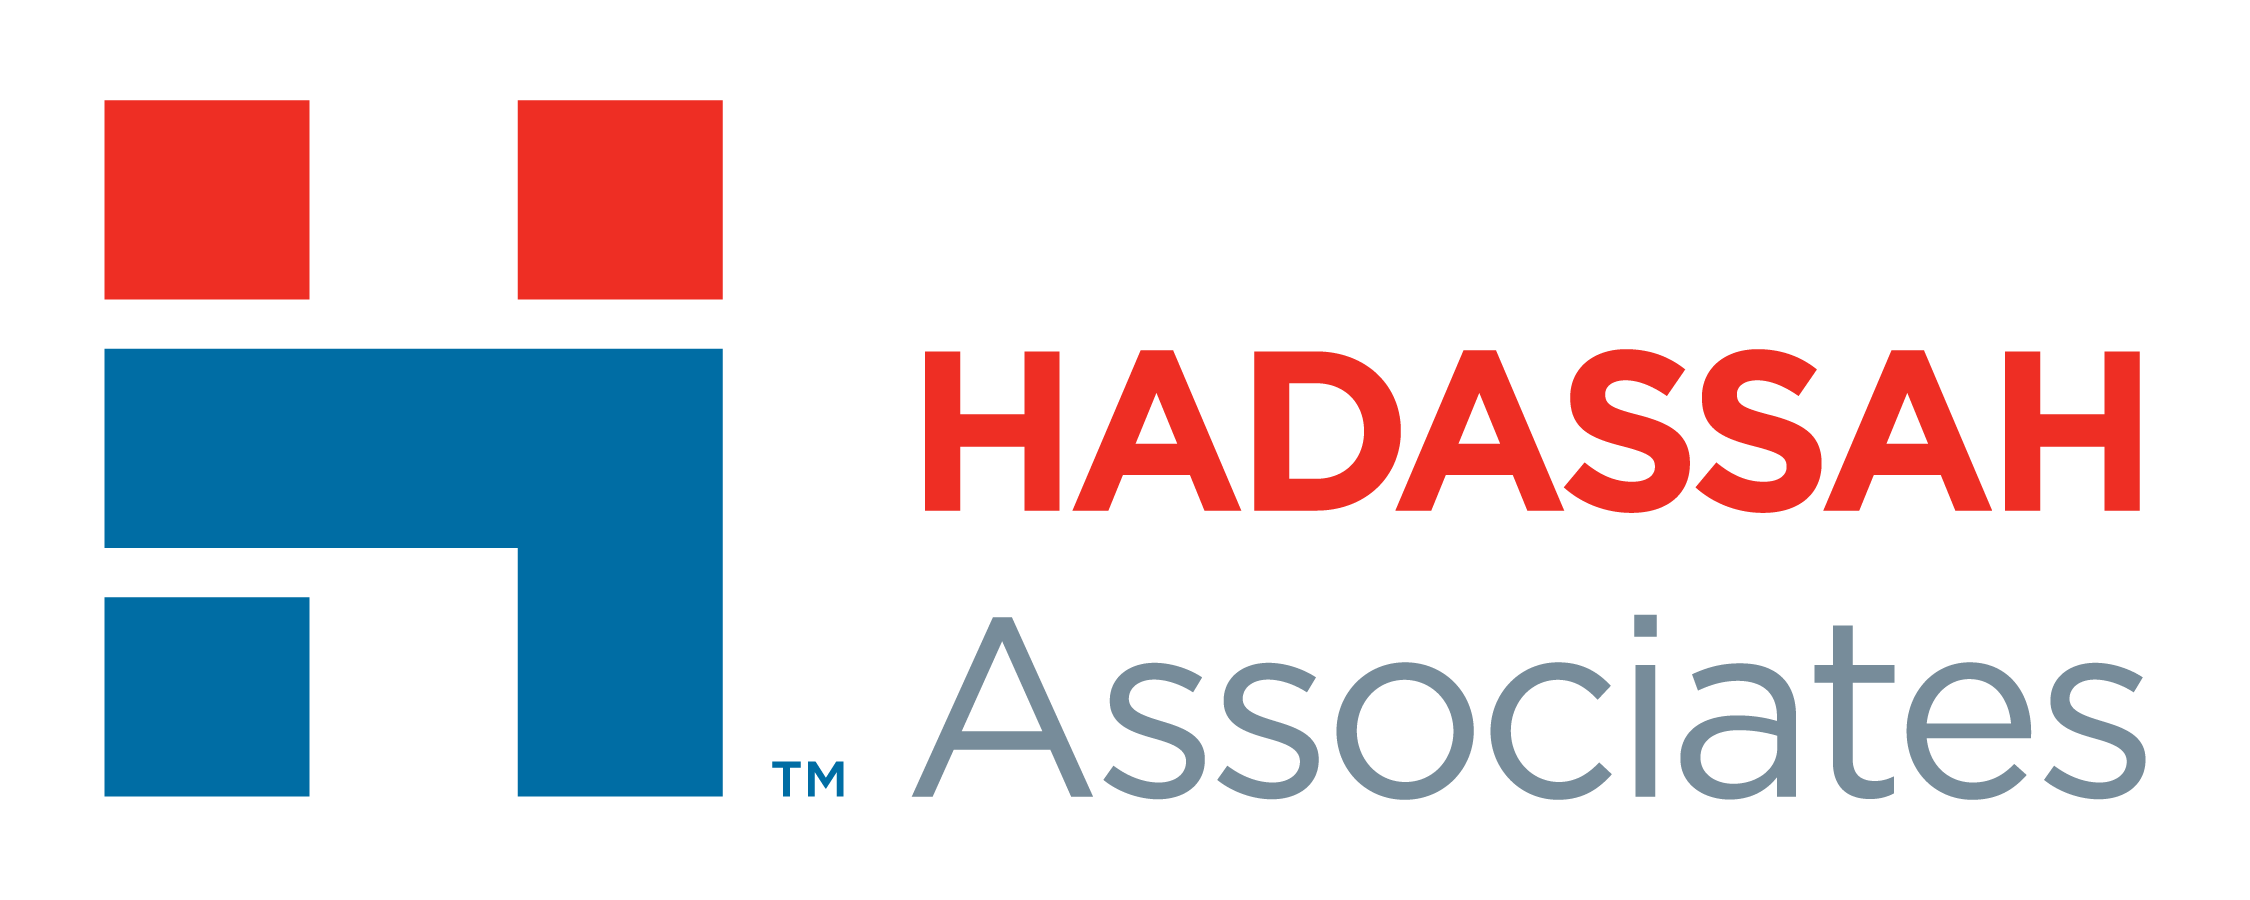 Hadassah Logo - Associates Poker Tournament | Hadassah, The Women's Zionist Org of ...